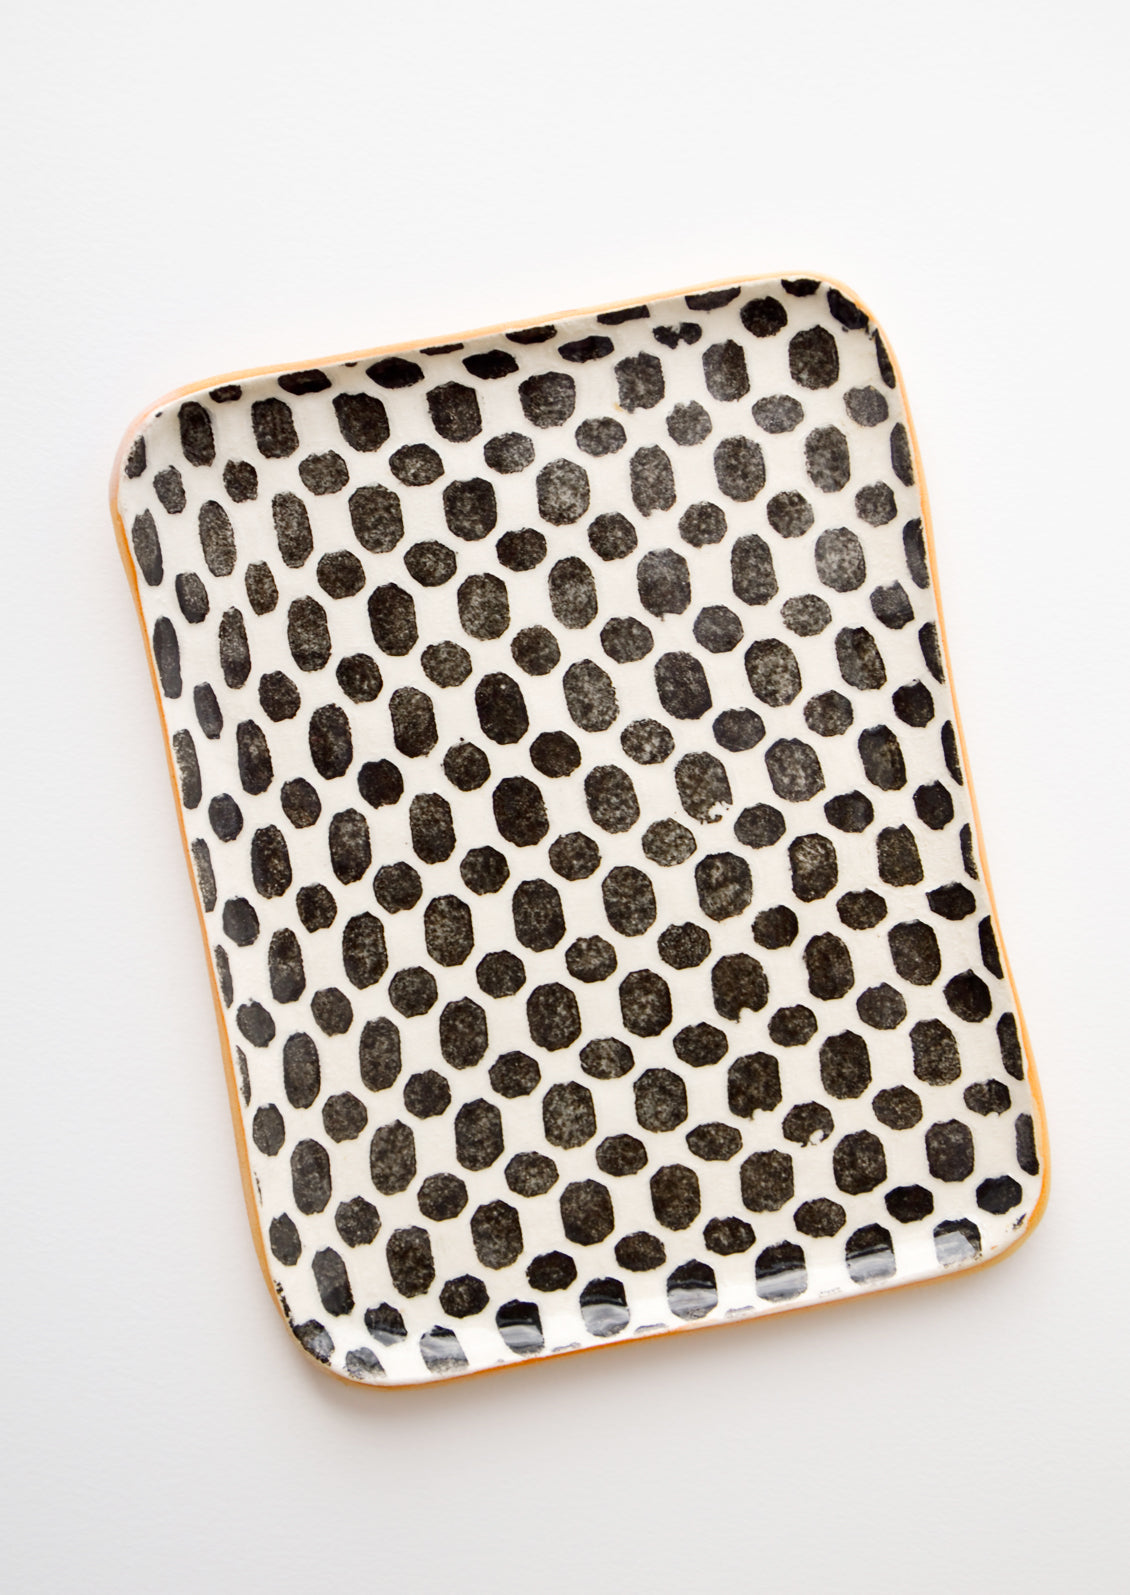 Pressed Pattern Ceramic Tea Tray in Dot Black - LEIF